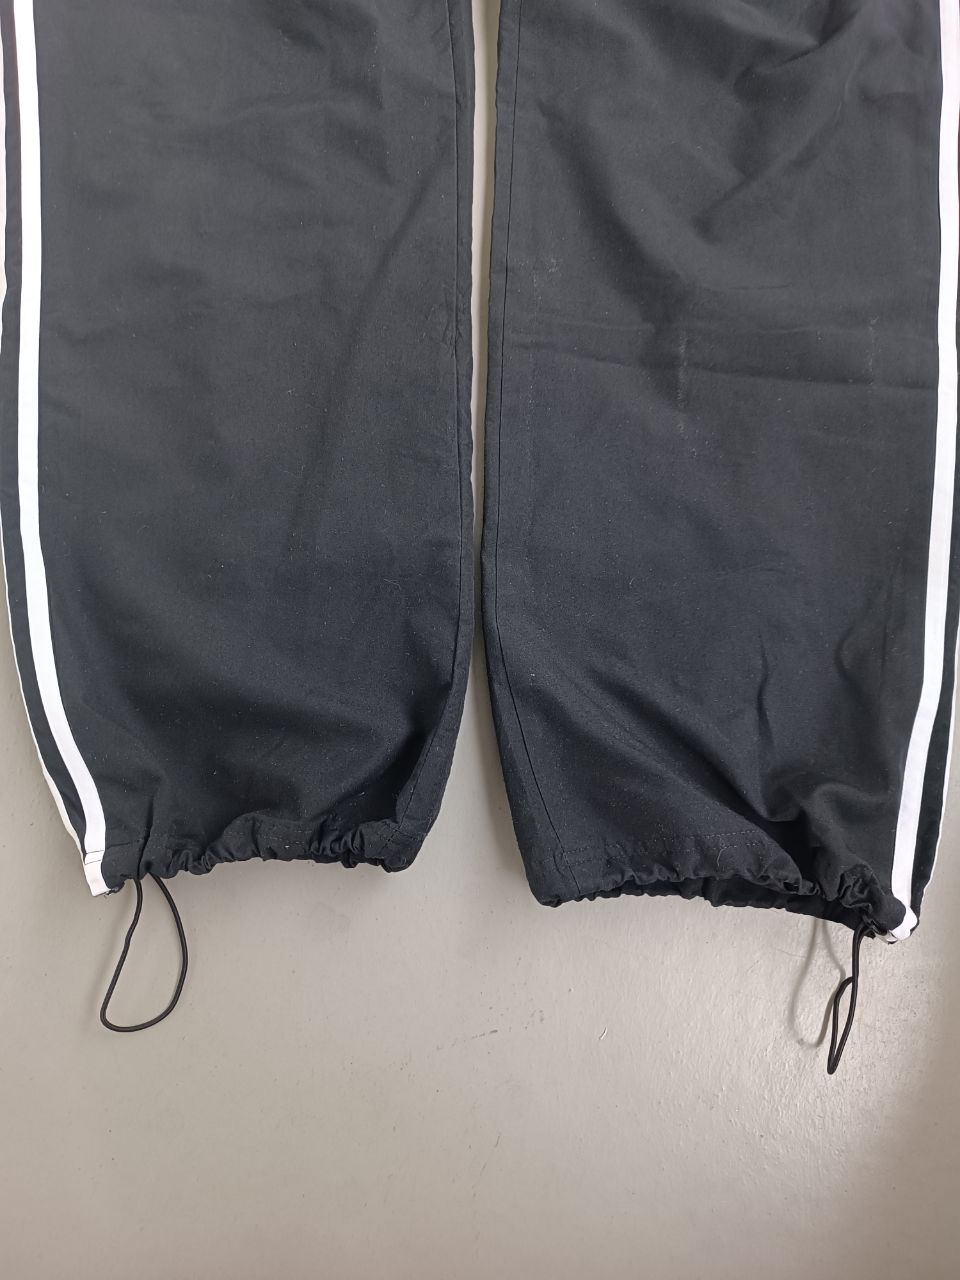 Adidas Trackpants - XL